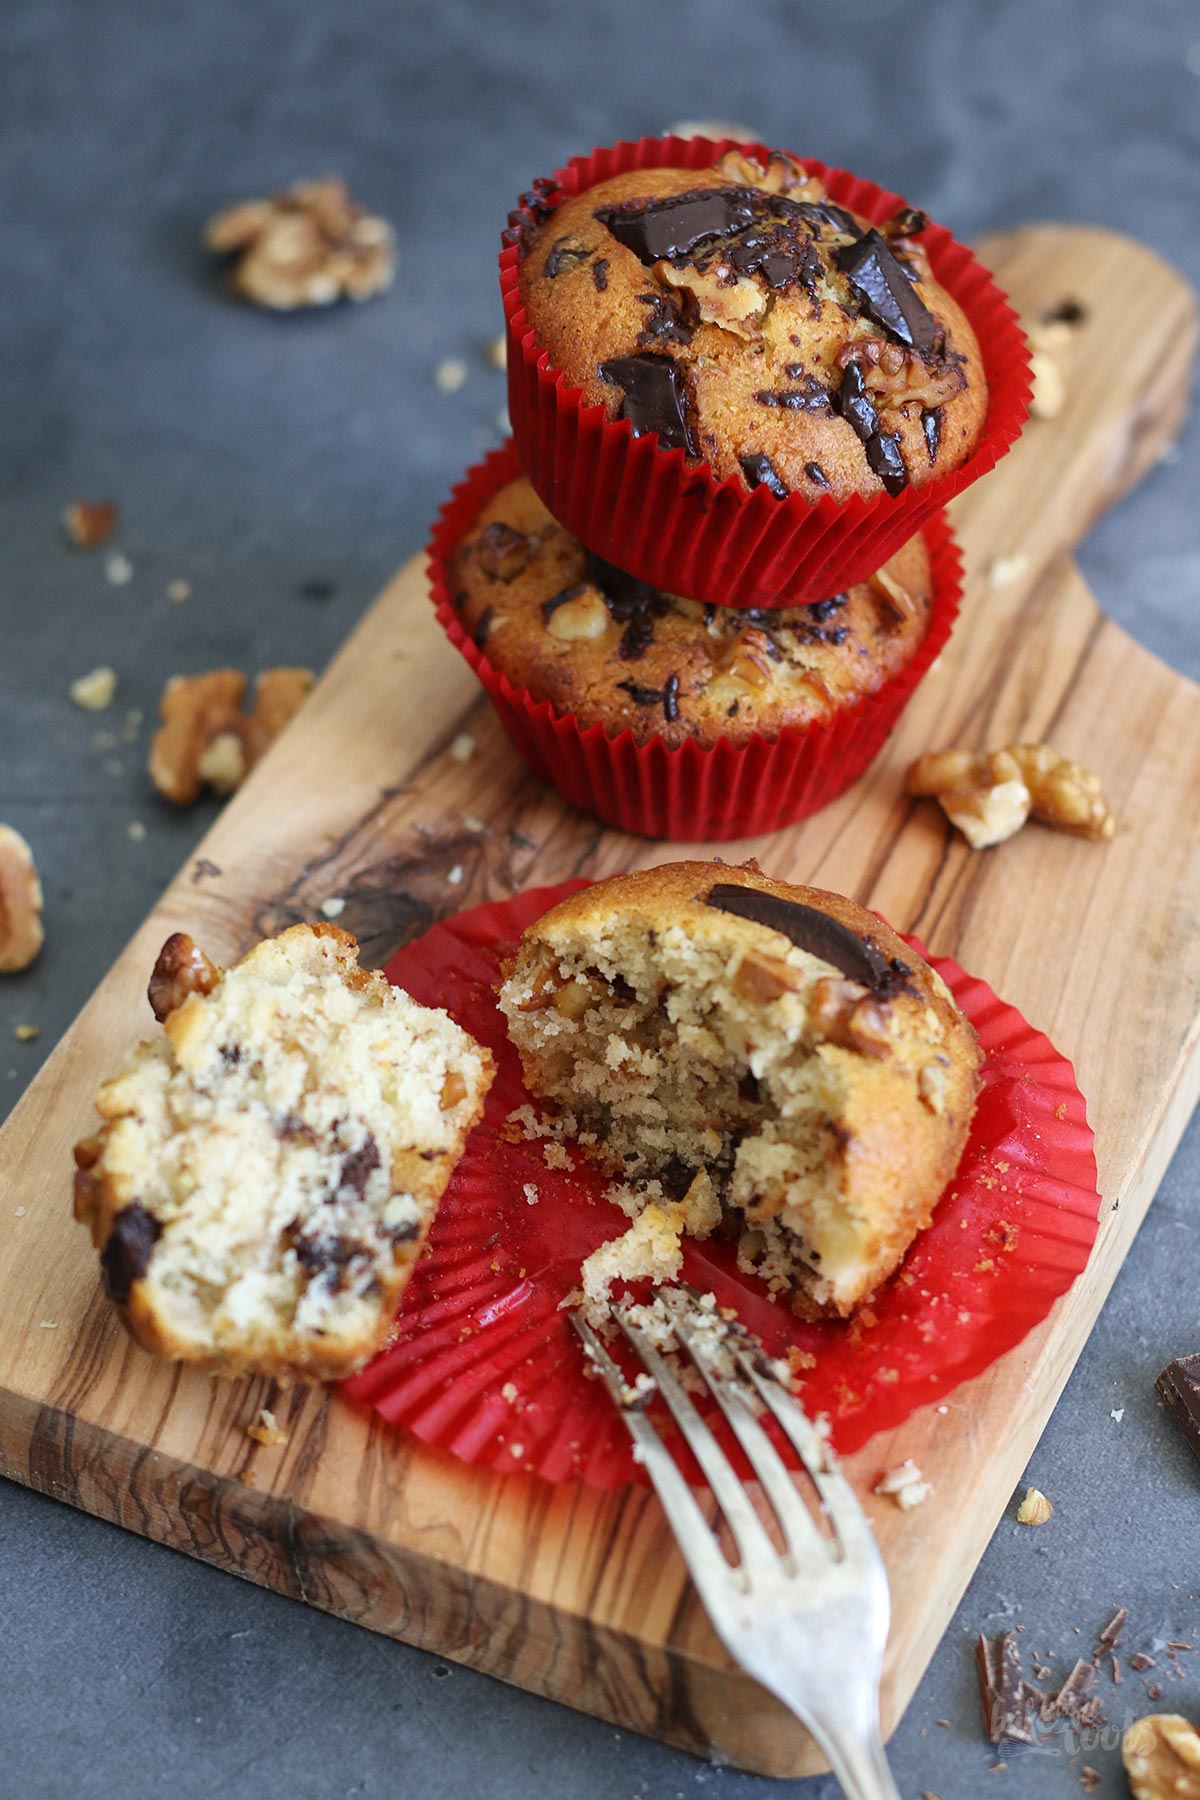 Apfel Walnuss & Schokolade Muffins | Bake to the roots